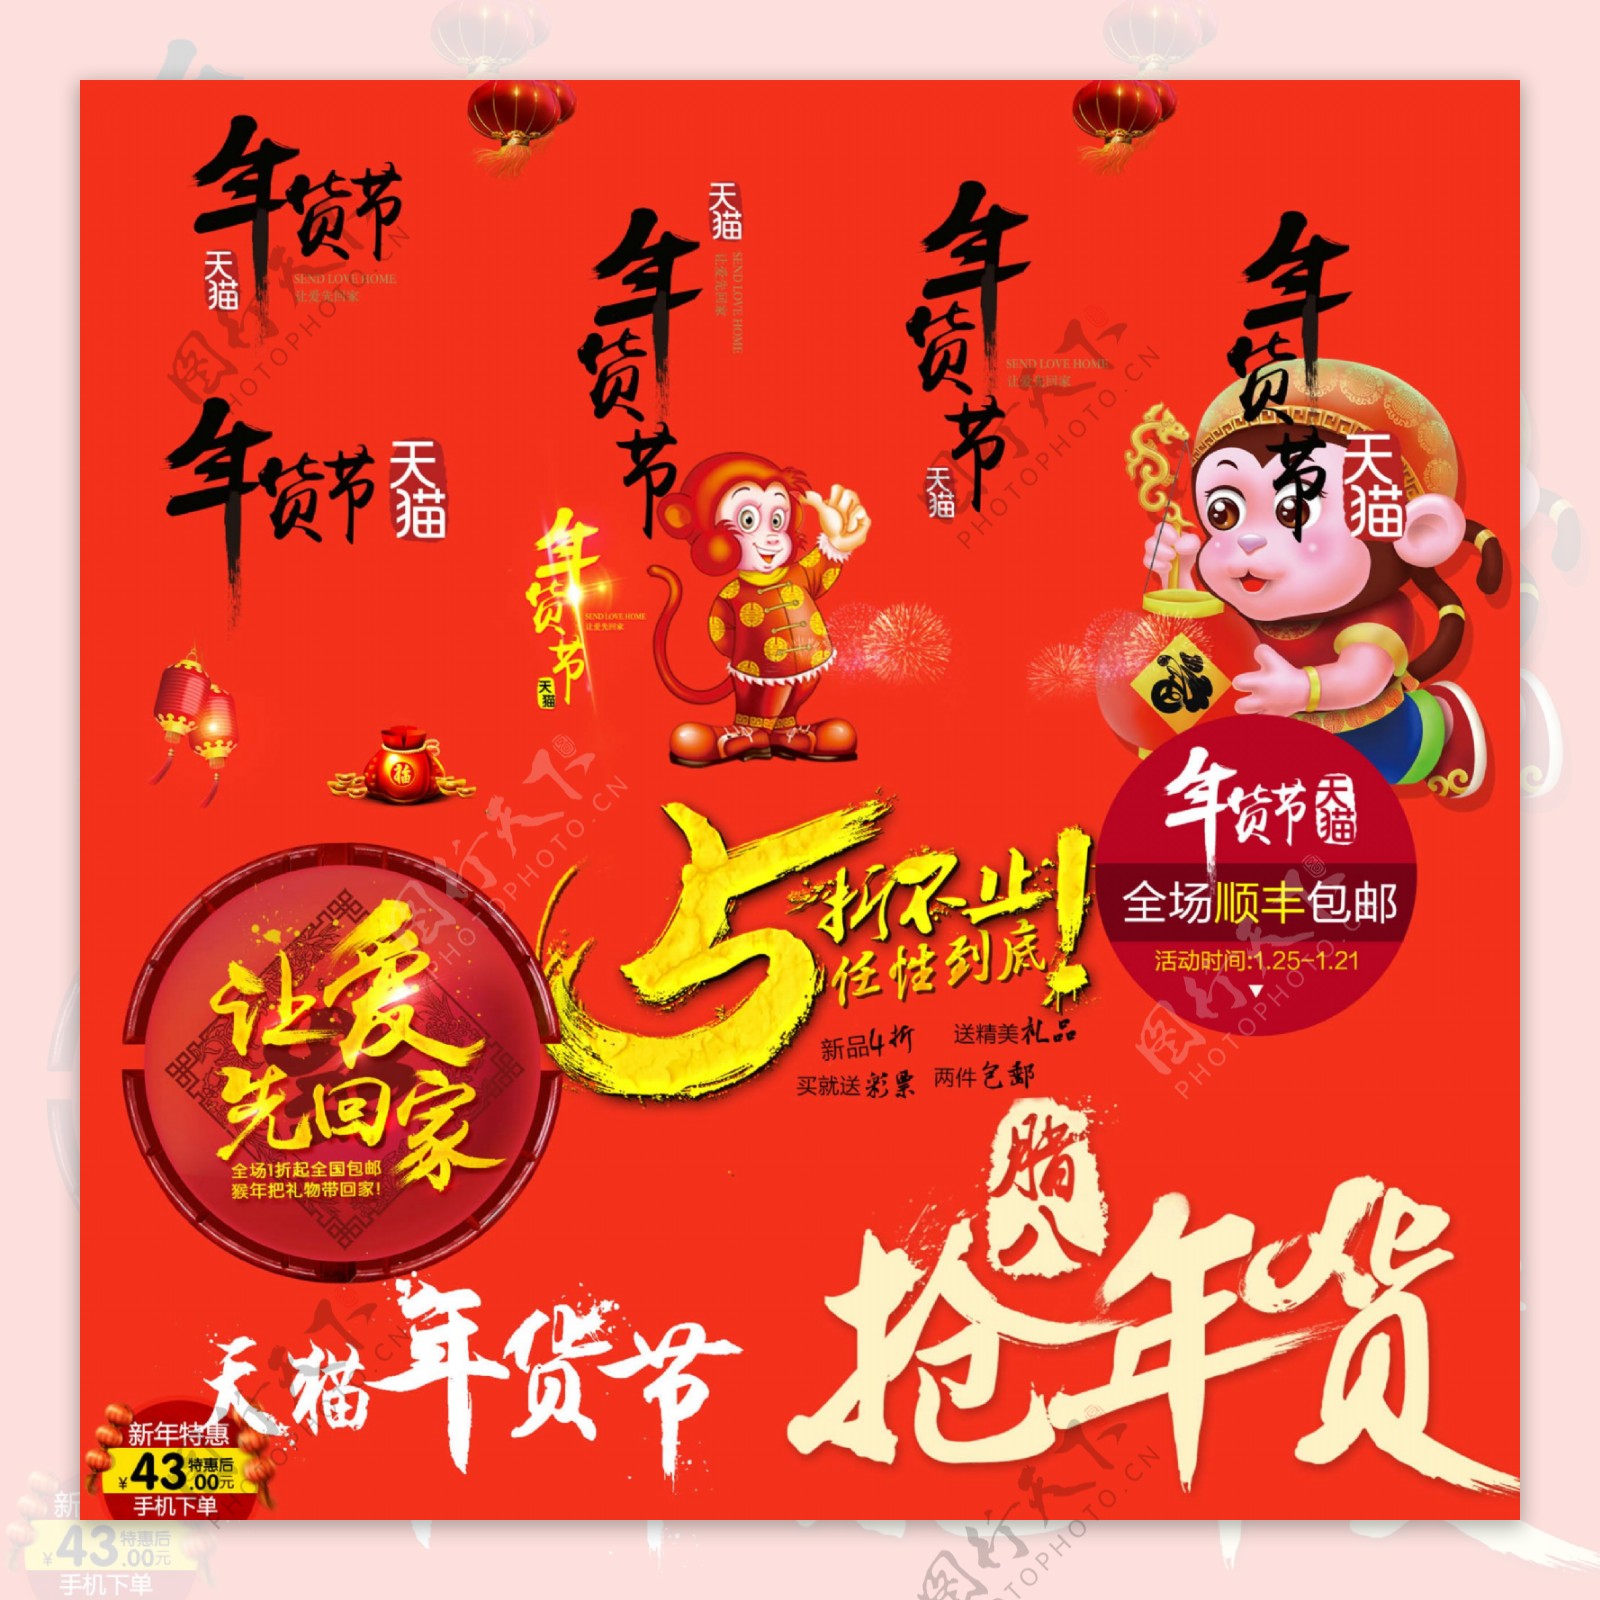 天猫年货节logo